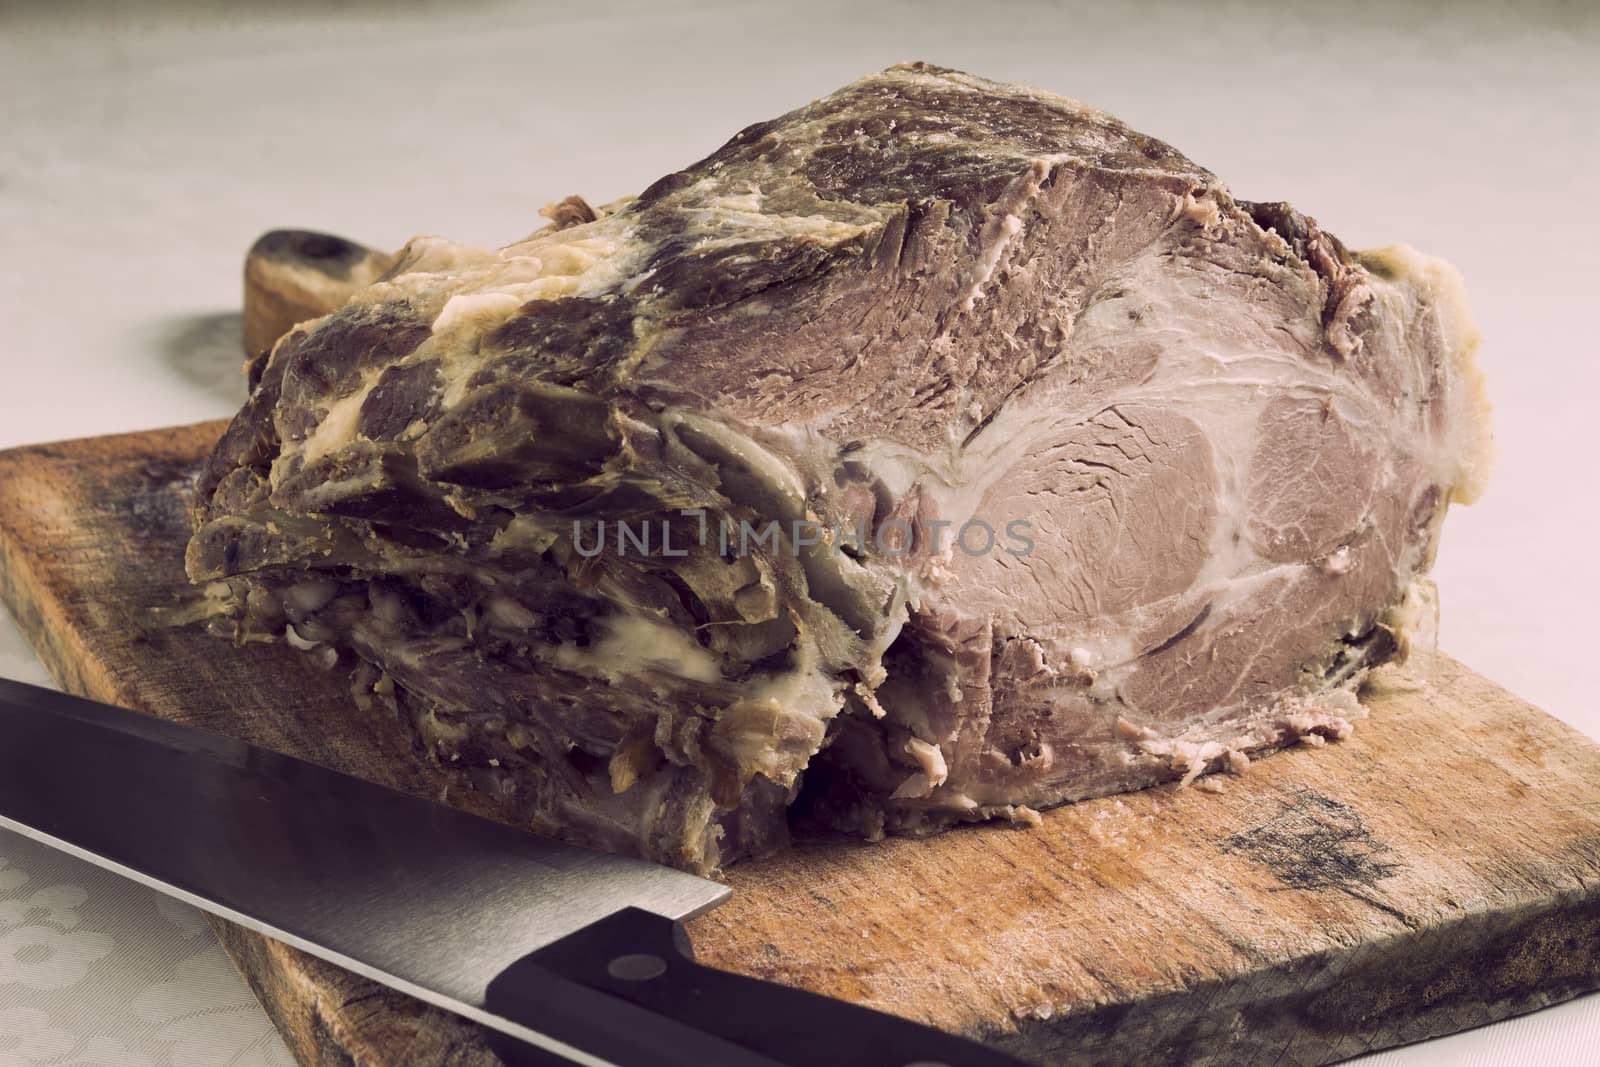 Roast pork neck on a cutting board - vintage look